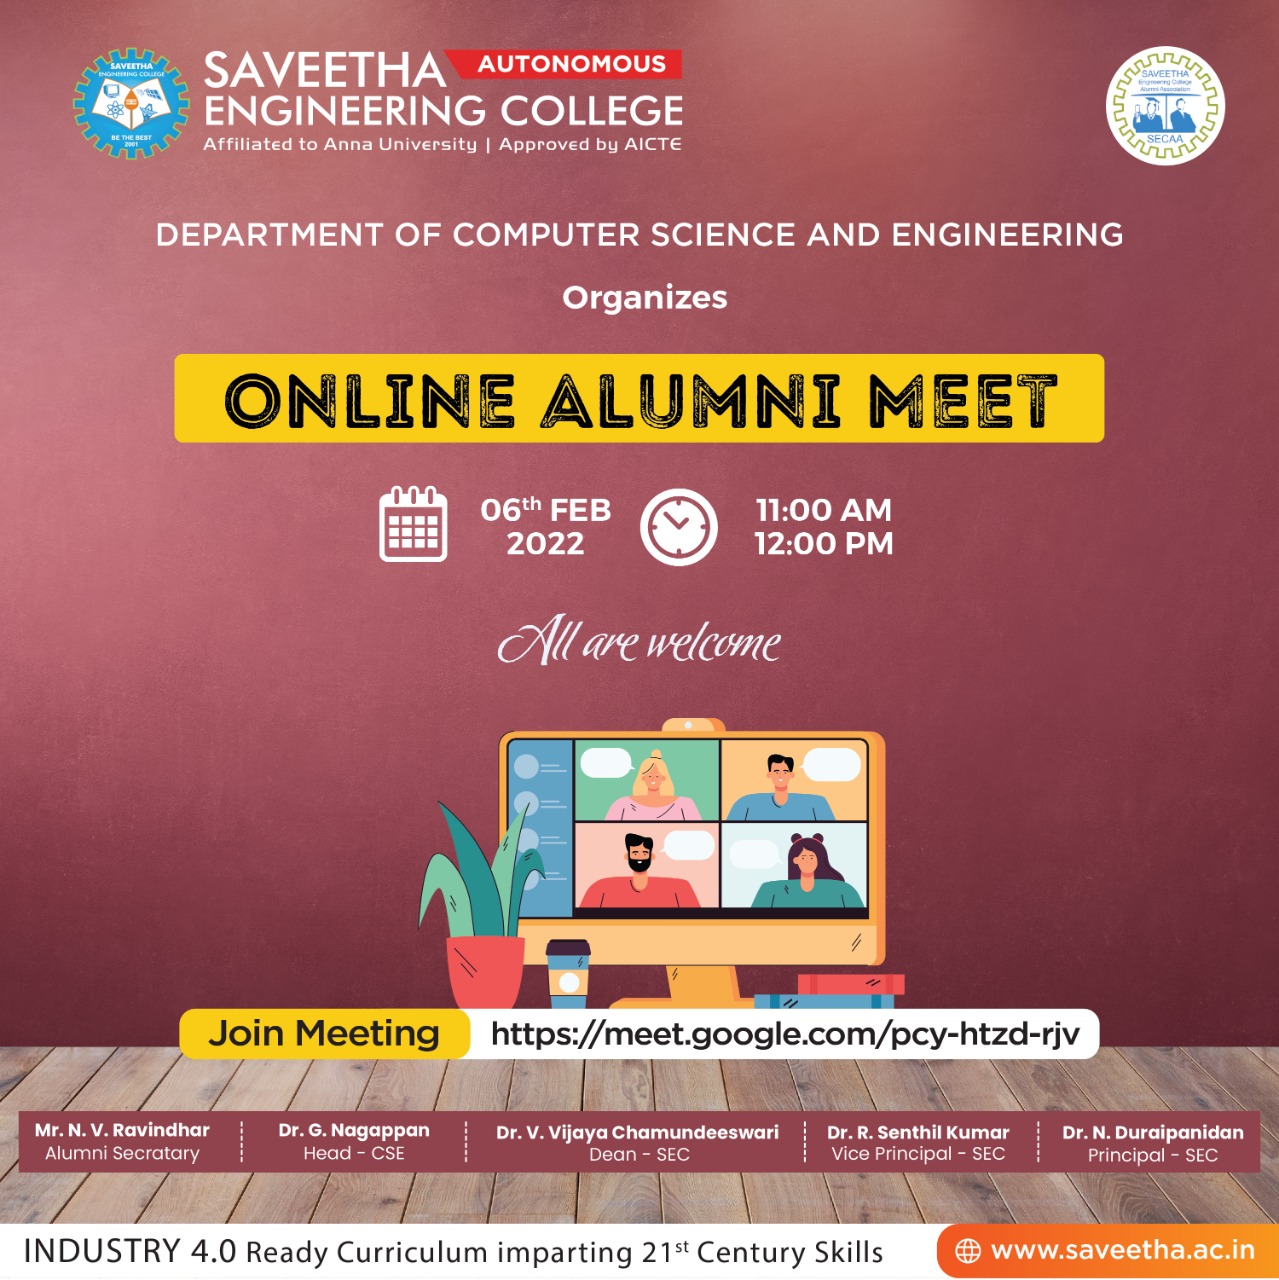 Online Alumni Meet conducted by CSE department of Saveetha Engineering College